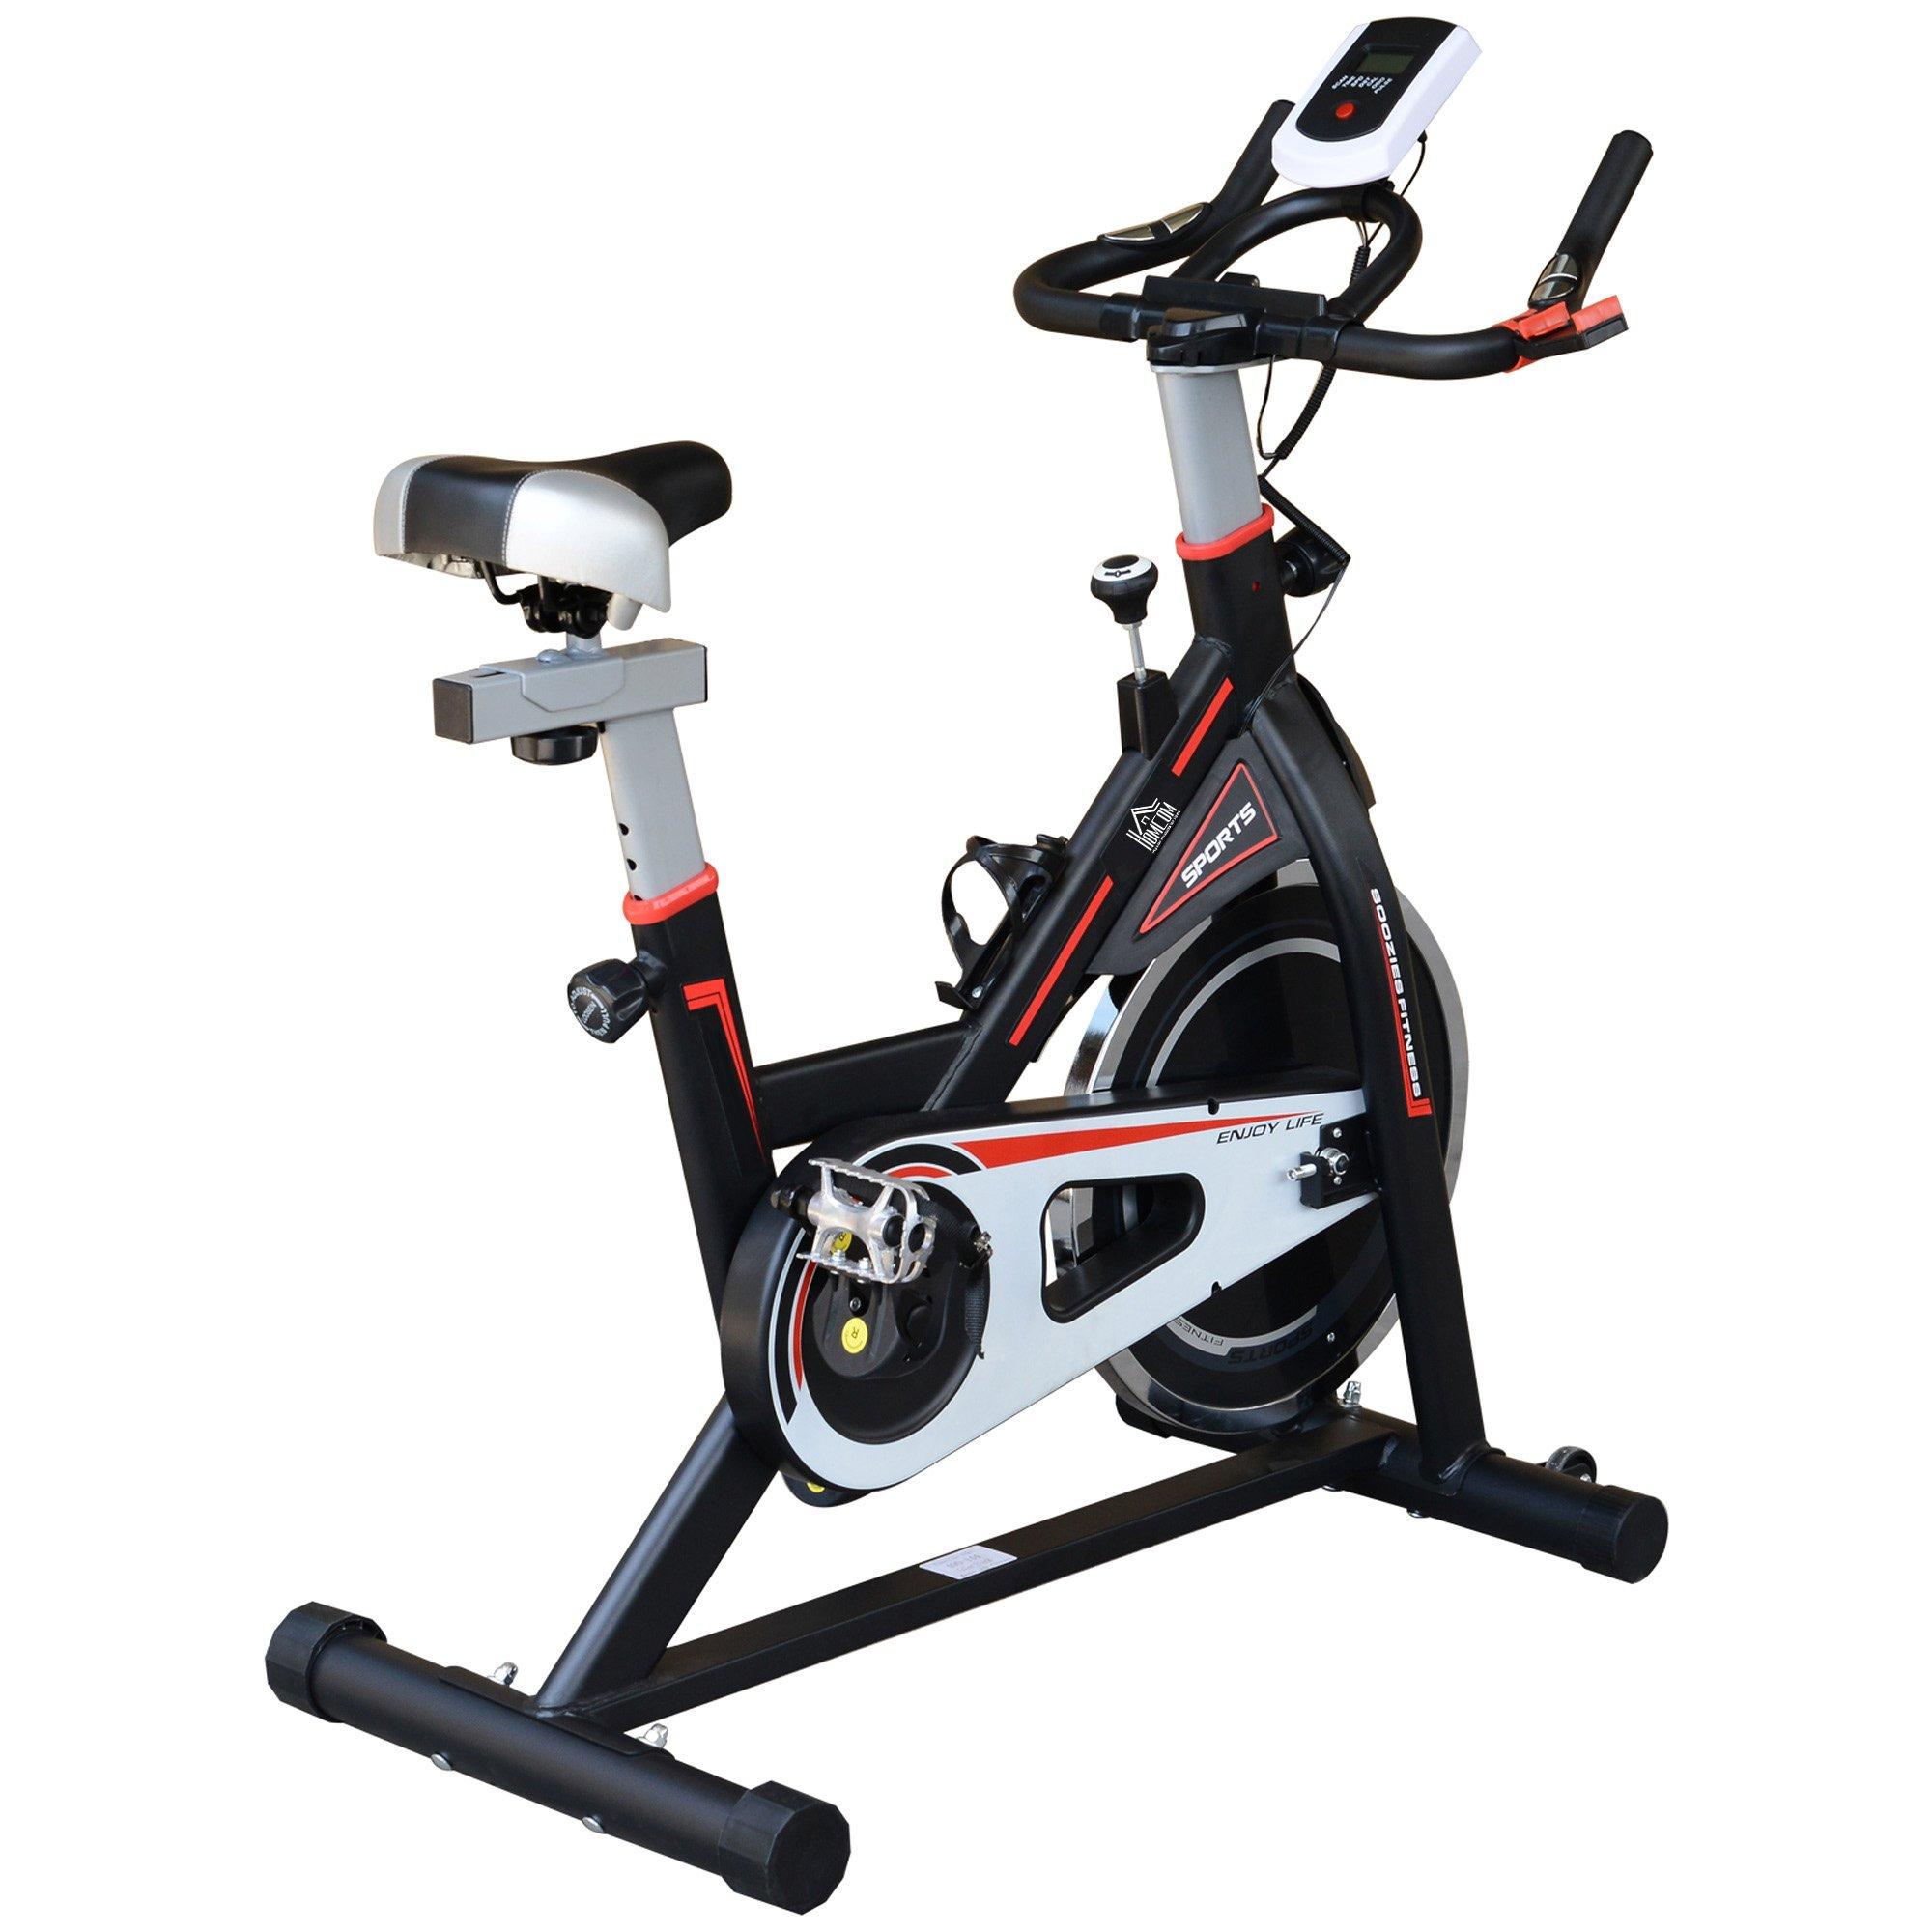 8kg Flywheel Exercise Bike Racing Bicycle Trainer with LCD Display, Resistance